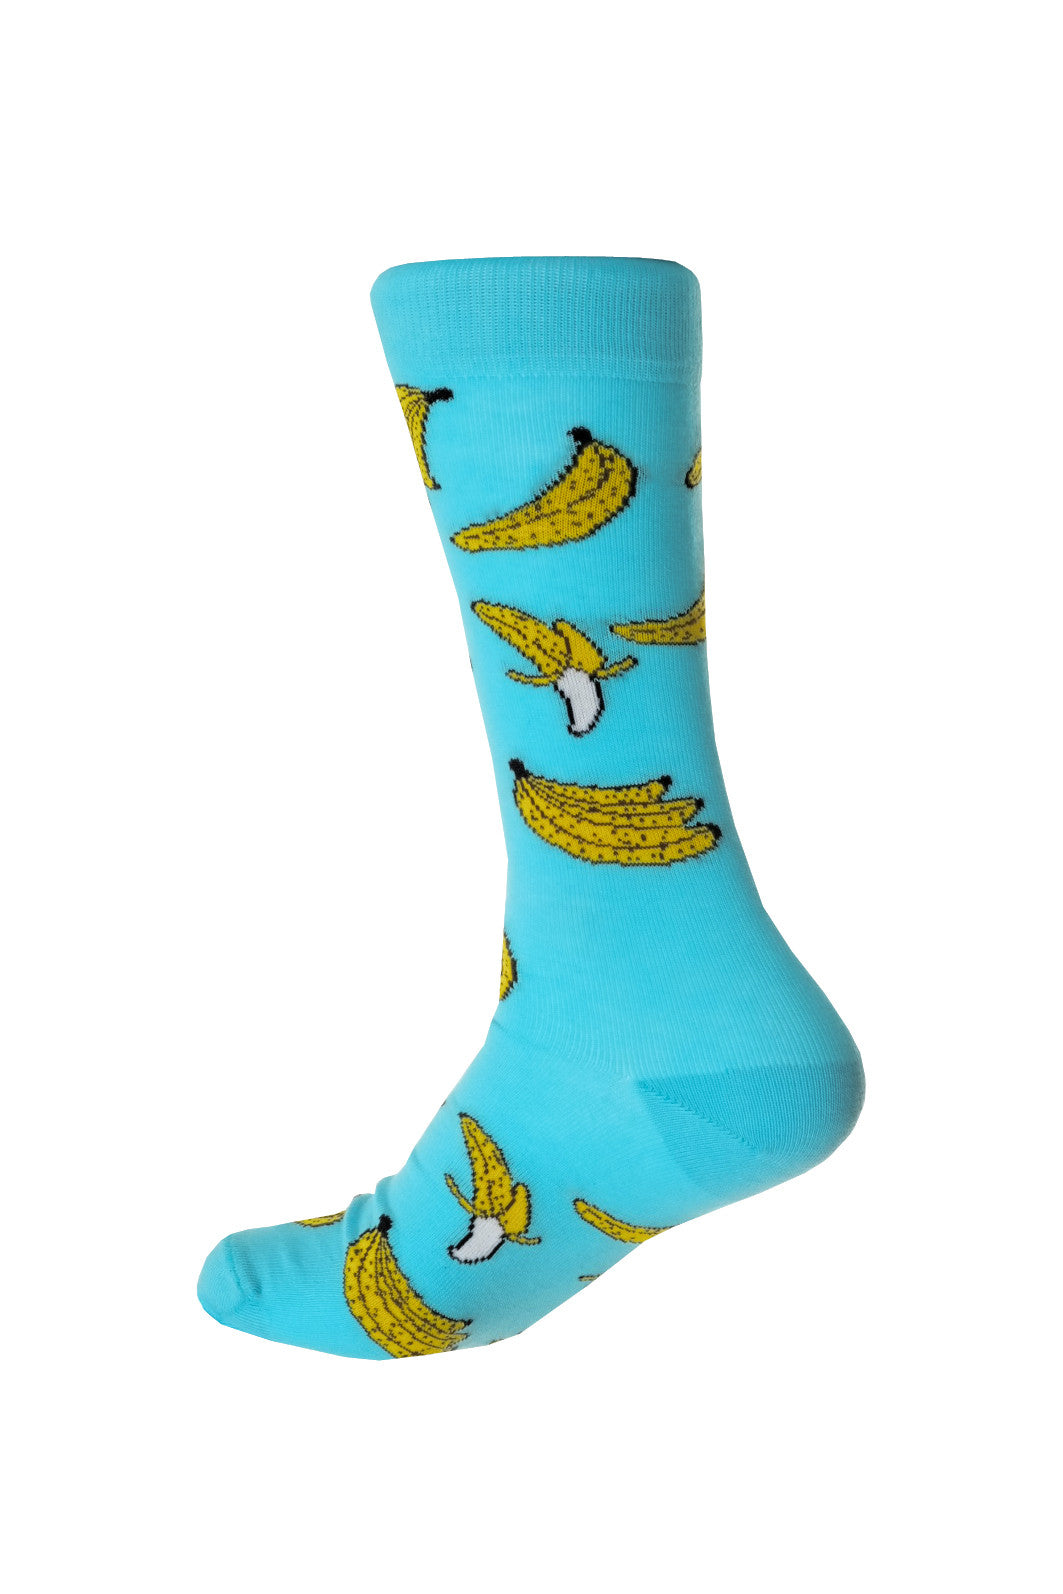 Giraffe Cool | Blue Yellow Bananas Brushed Cotton Socks Foot Back